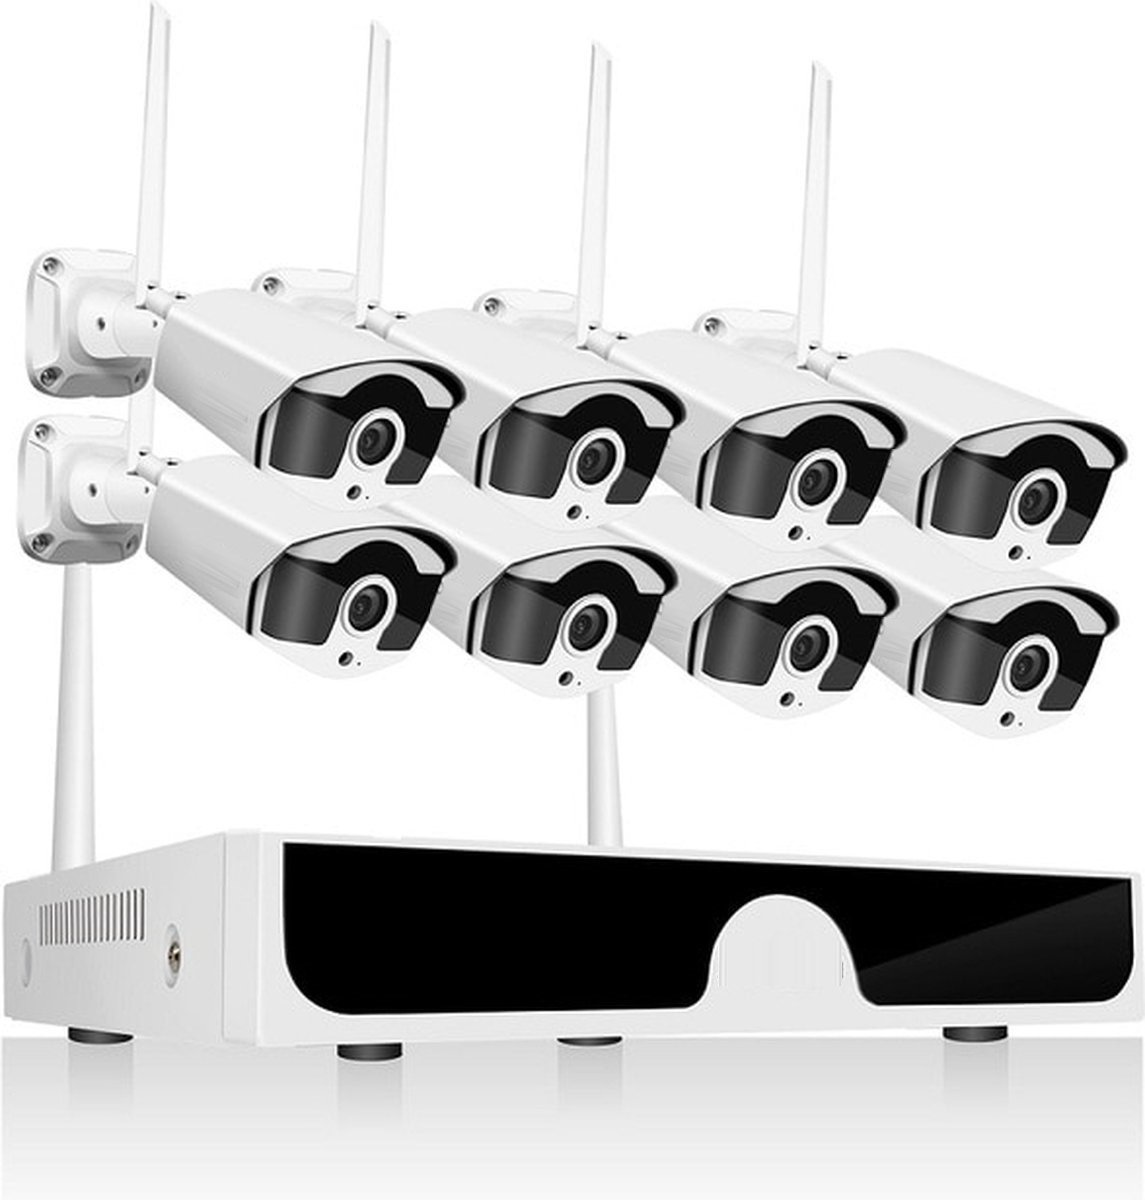 CCTV - Beveiligingscamera set met 8 Cameras Outdoor Buiten - Home Security Camera Systeem - Wifi Camera Set - Video + Audio-opname - Beveiligingscamera - Nachtzicht - Motion Detector